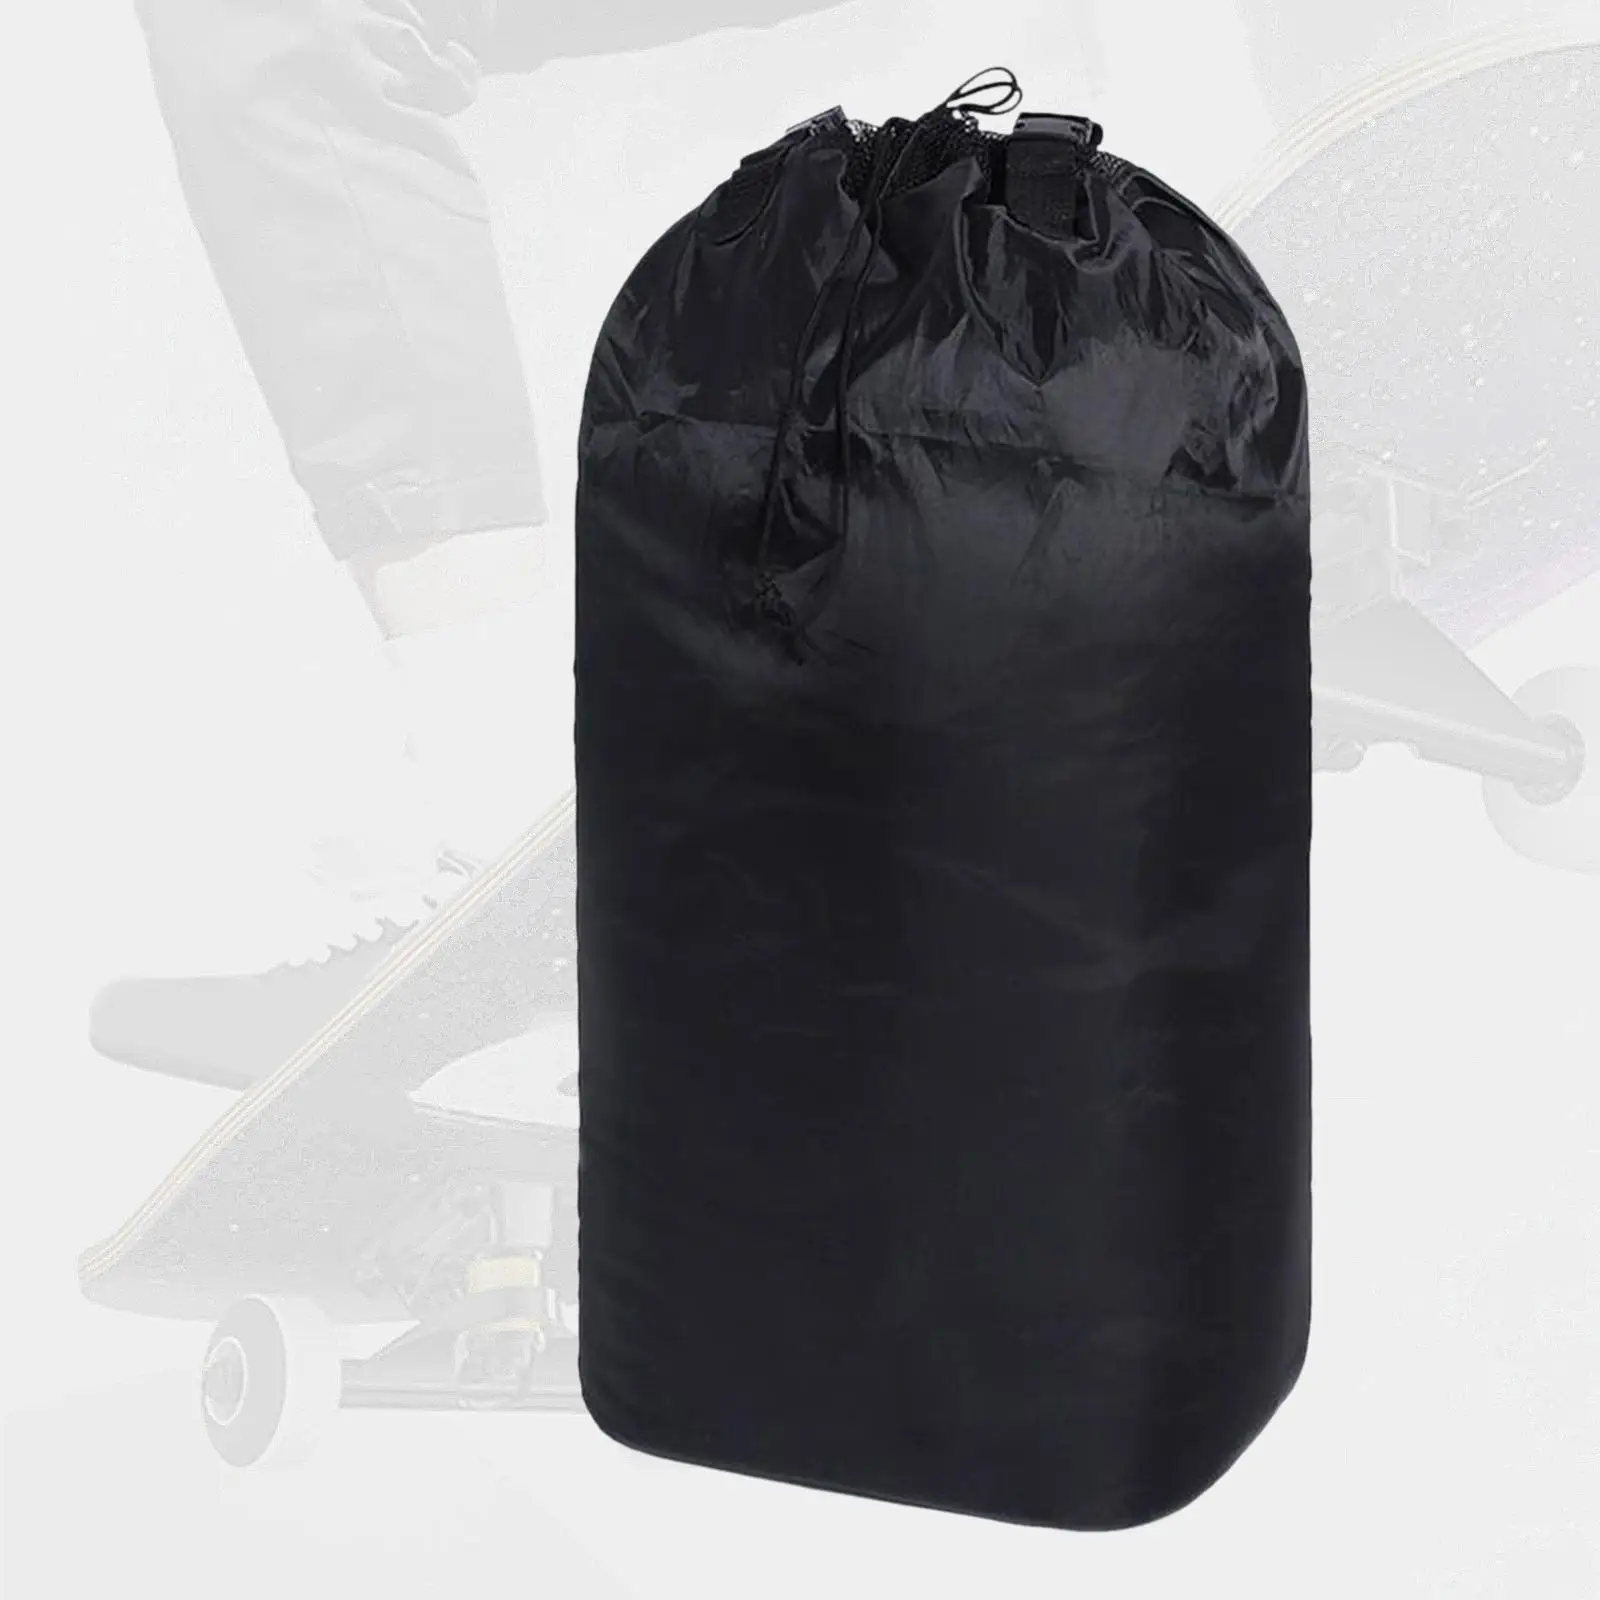 Board Bag Inflatable Paddleboard Backpack for Kayaking